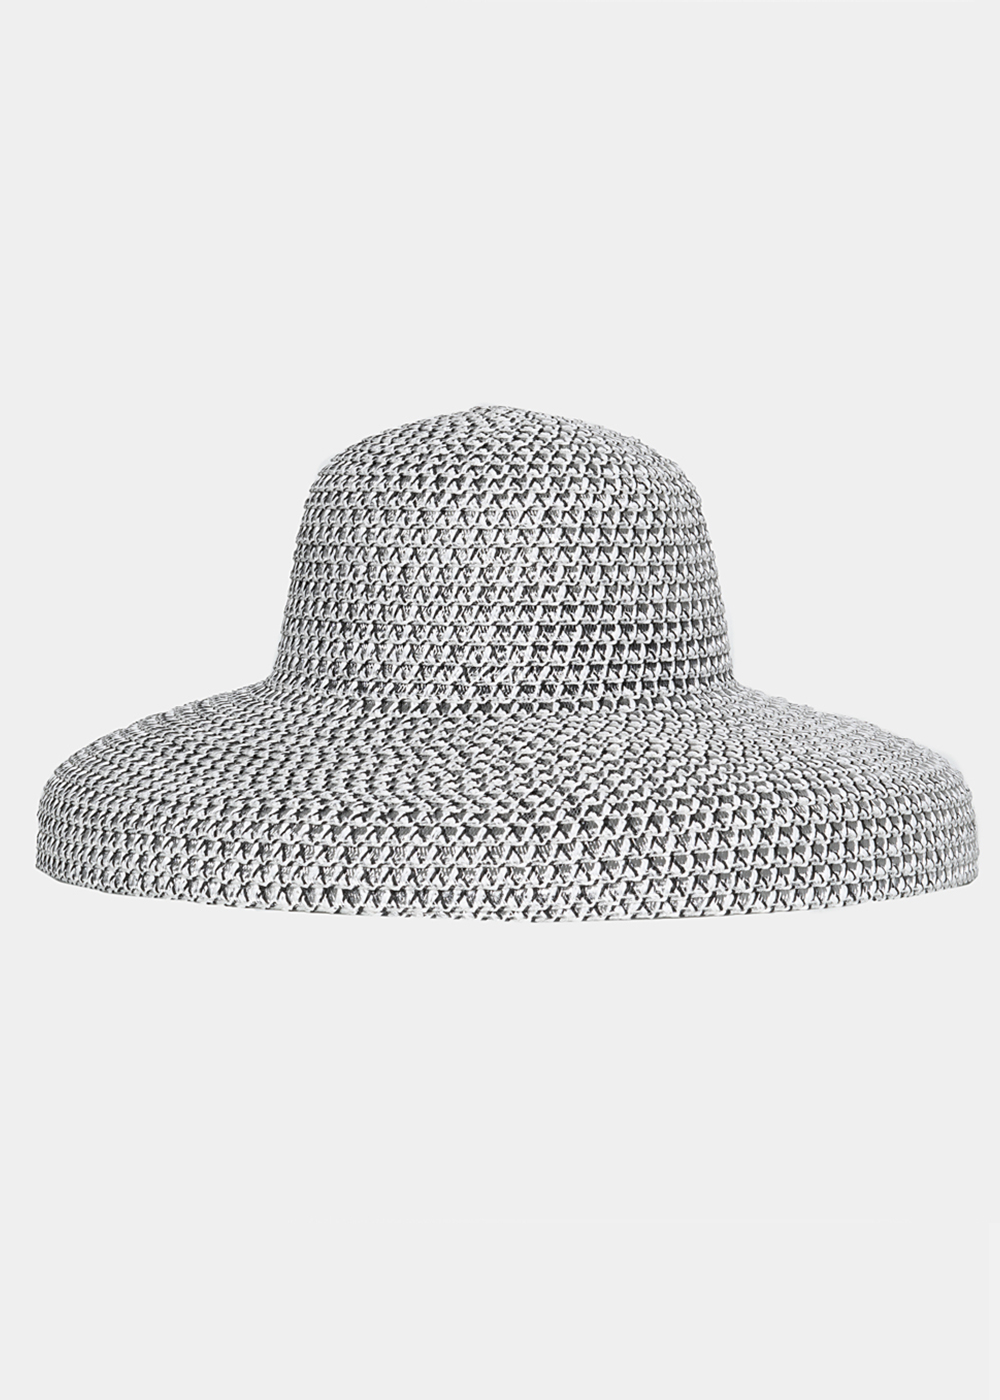 grey straw hat 